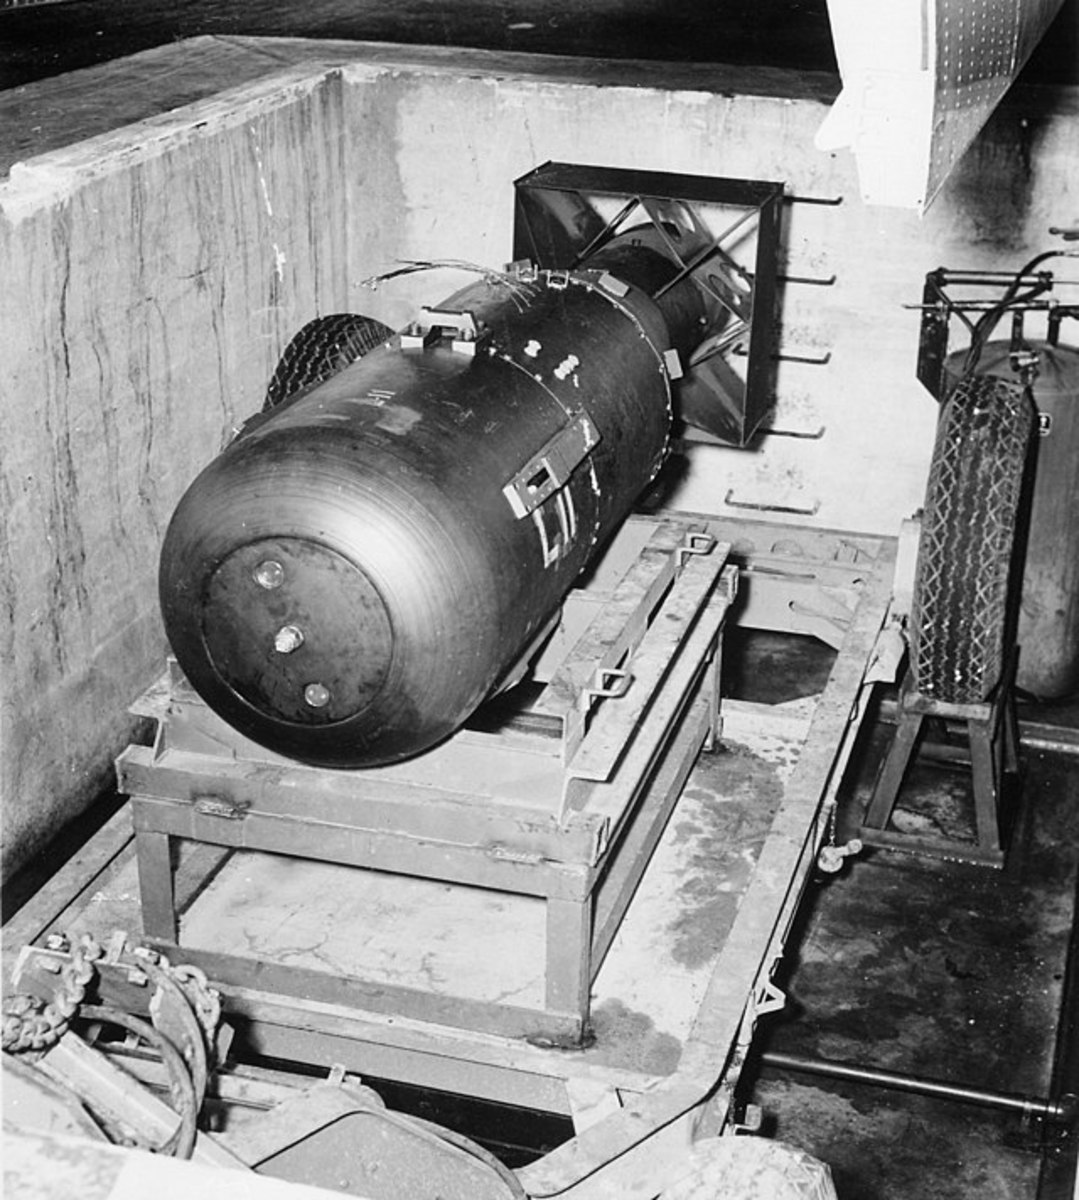 'Little Boy' an atomic bomb